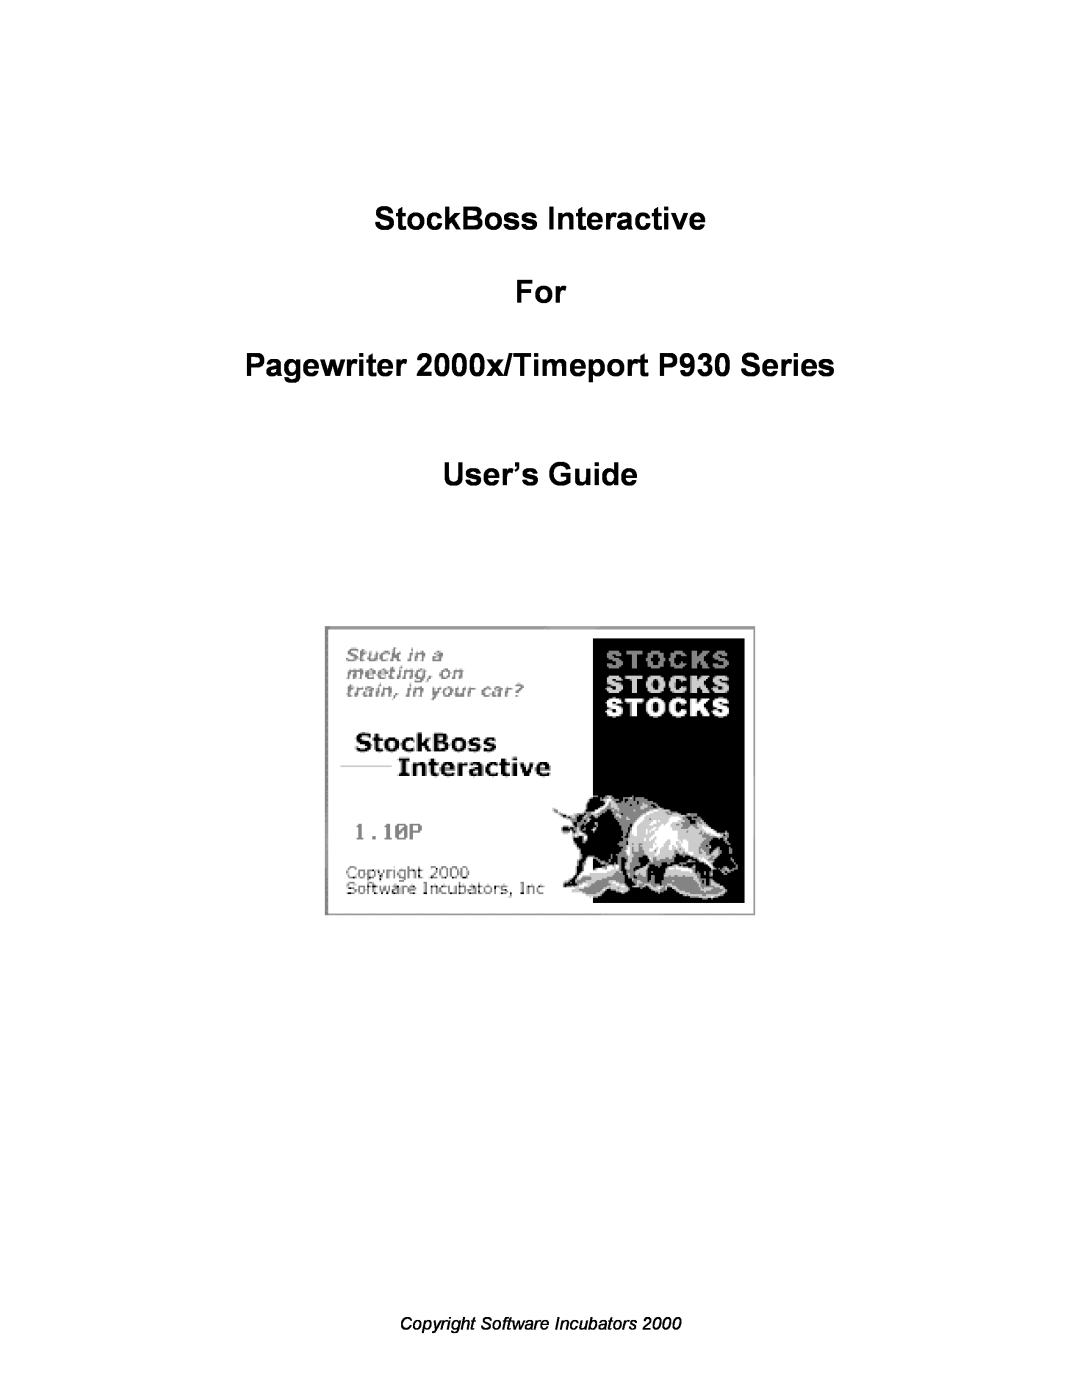 Motorola manual StockBoss Interactive For Pagewriter 2000x/Timeport P930 Series, User’s Guide 